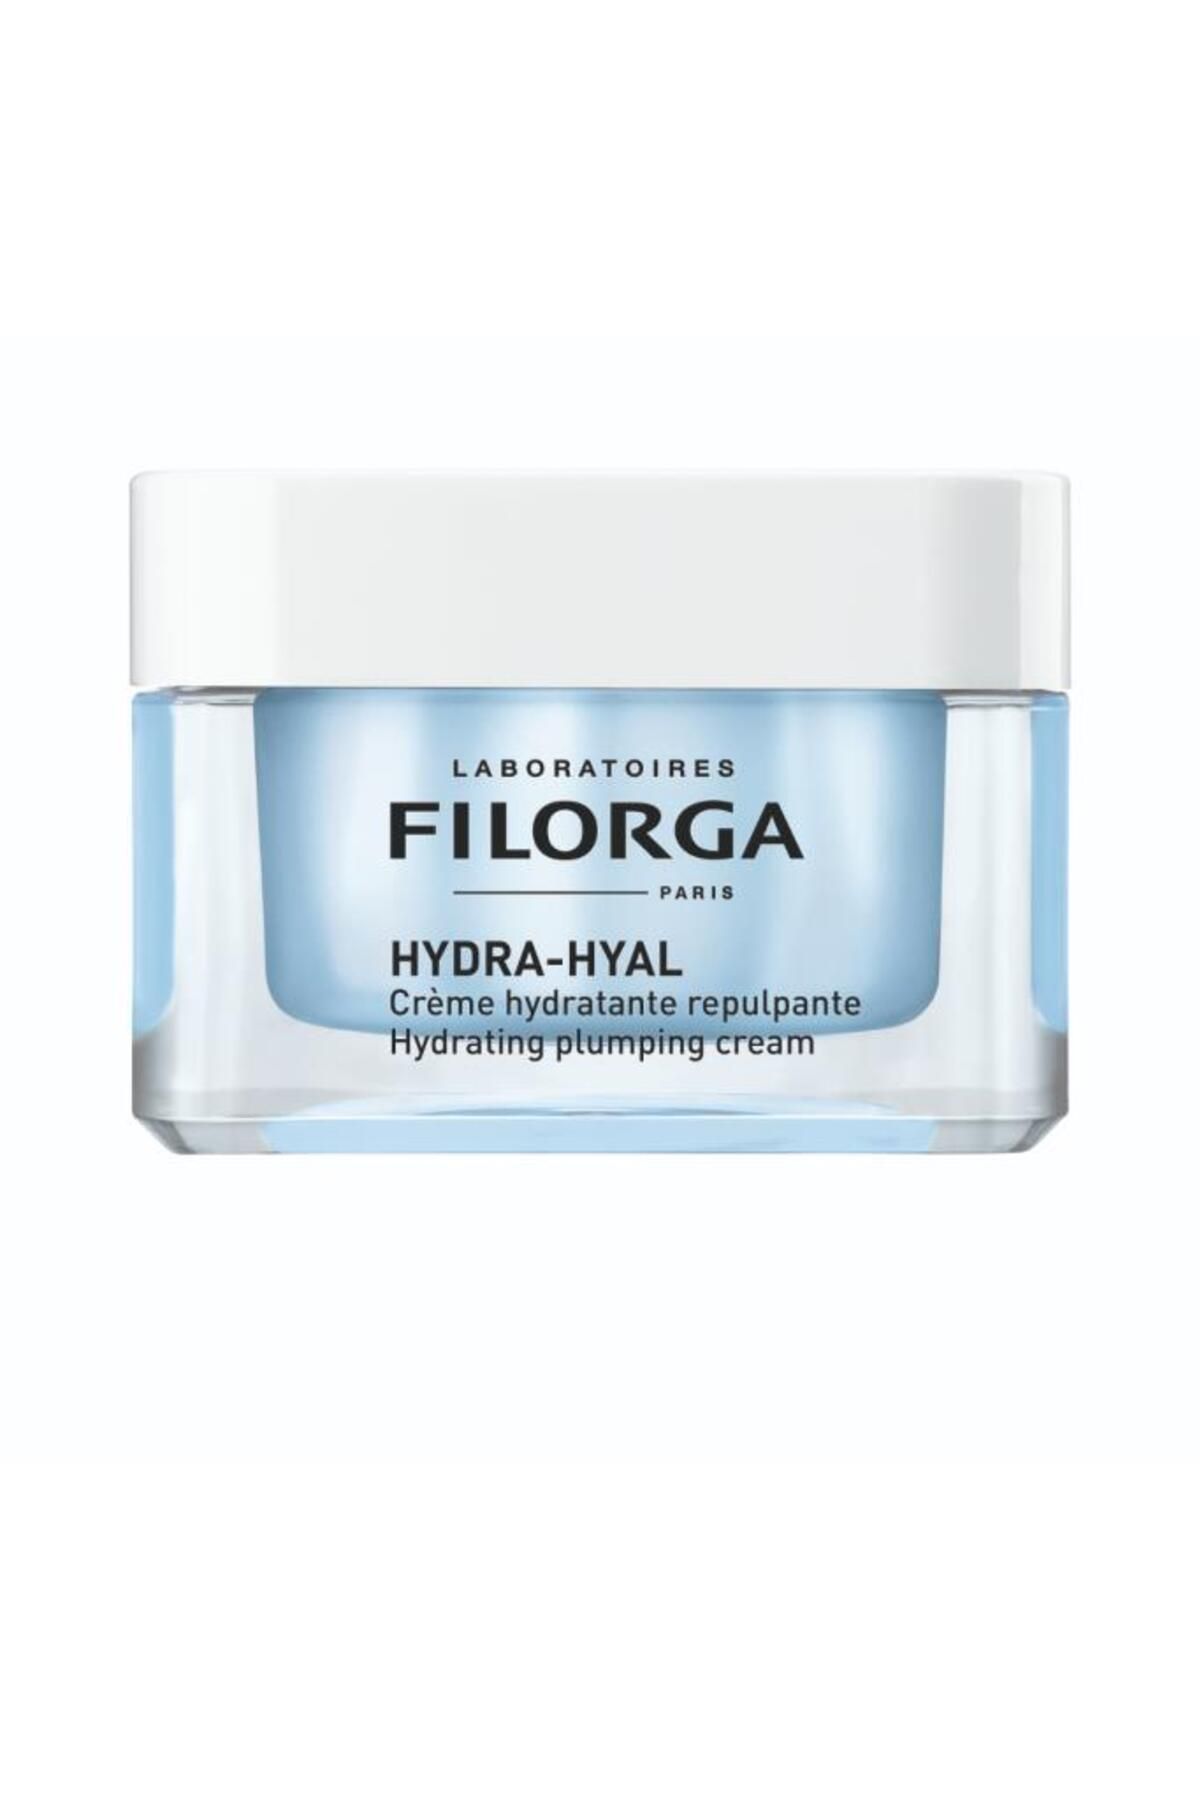 Filorga Hydra-hyal Hydrating Plumping Cream 50 ml